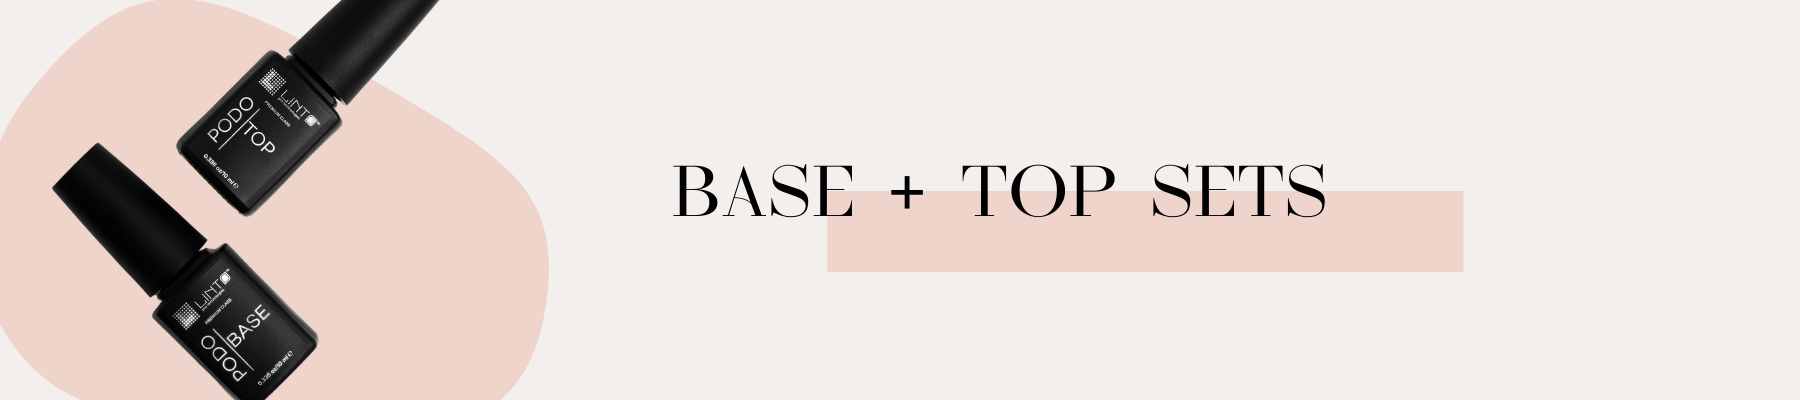 Base + Top Sets